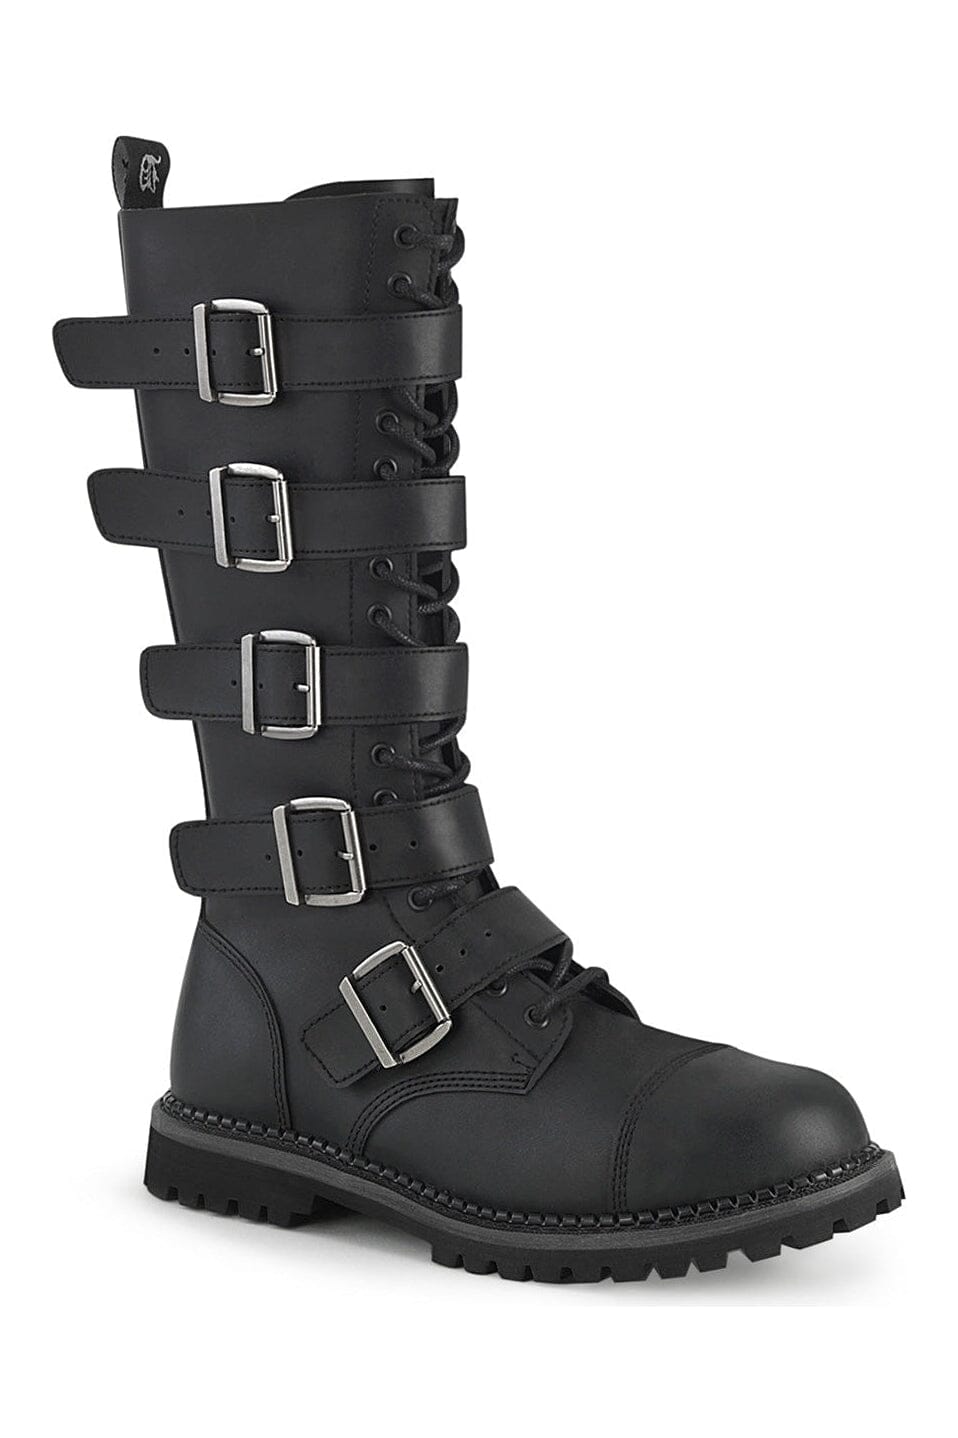 RIOT-18BK Black Vegan Leather Knee Boot-Knee Boots-Demonia-Black-10-Vegan Leather-SEXYSHOES.COM